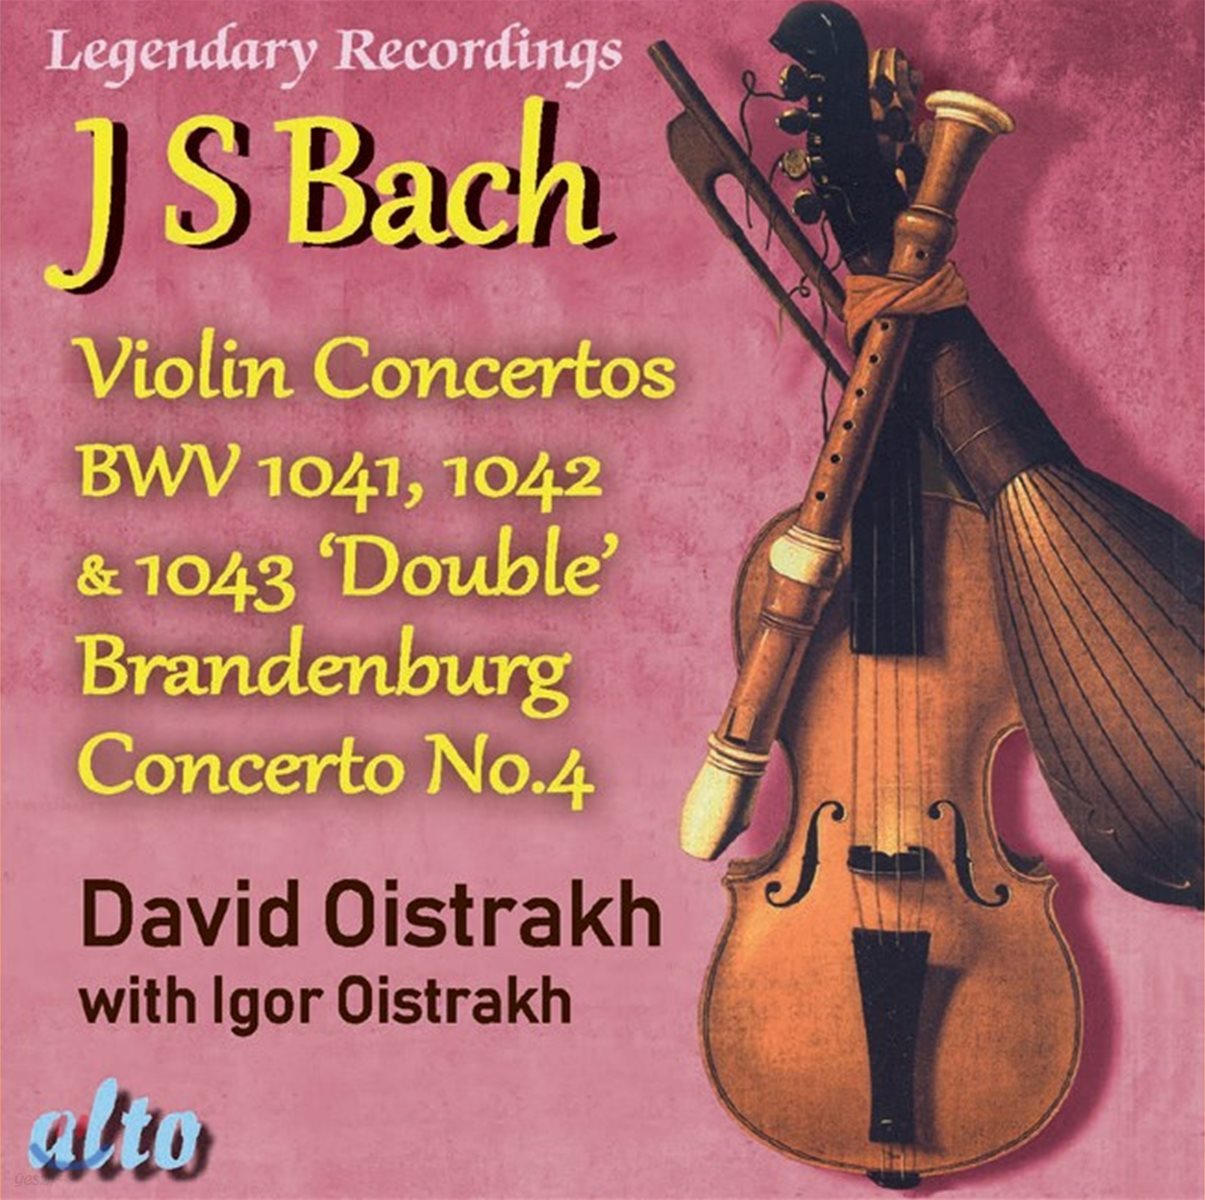 David Oistrakh 바흐: 바이올린 협주곡, 브란덴부르크 협주곡 4번 (Bach: Violin Concertos, Brandenburg Concerto No. 4)